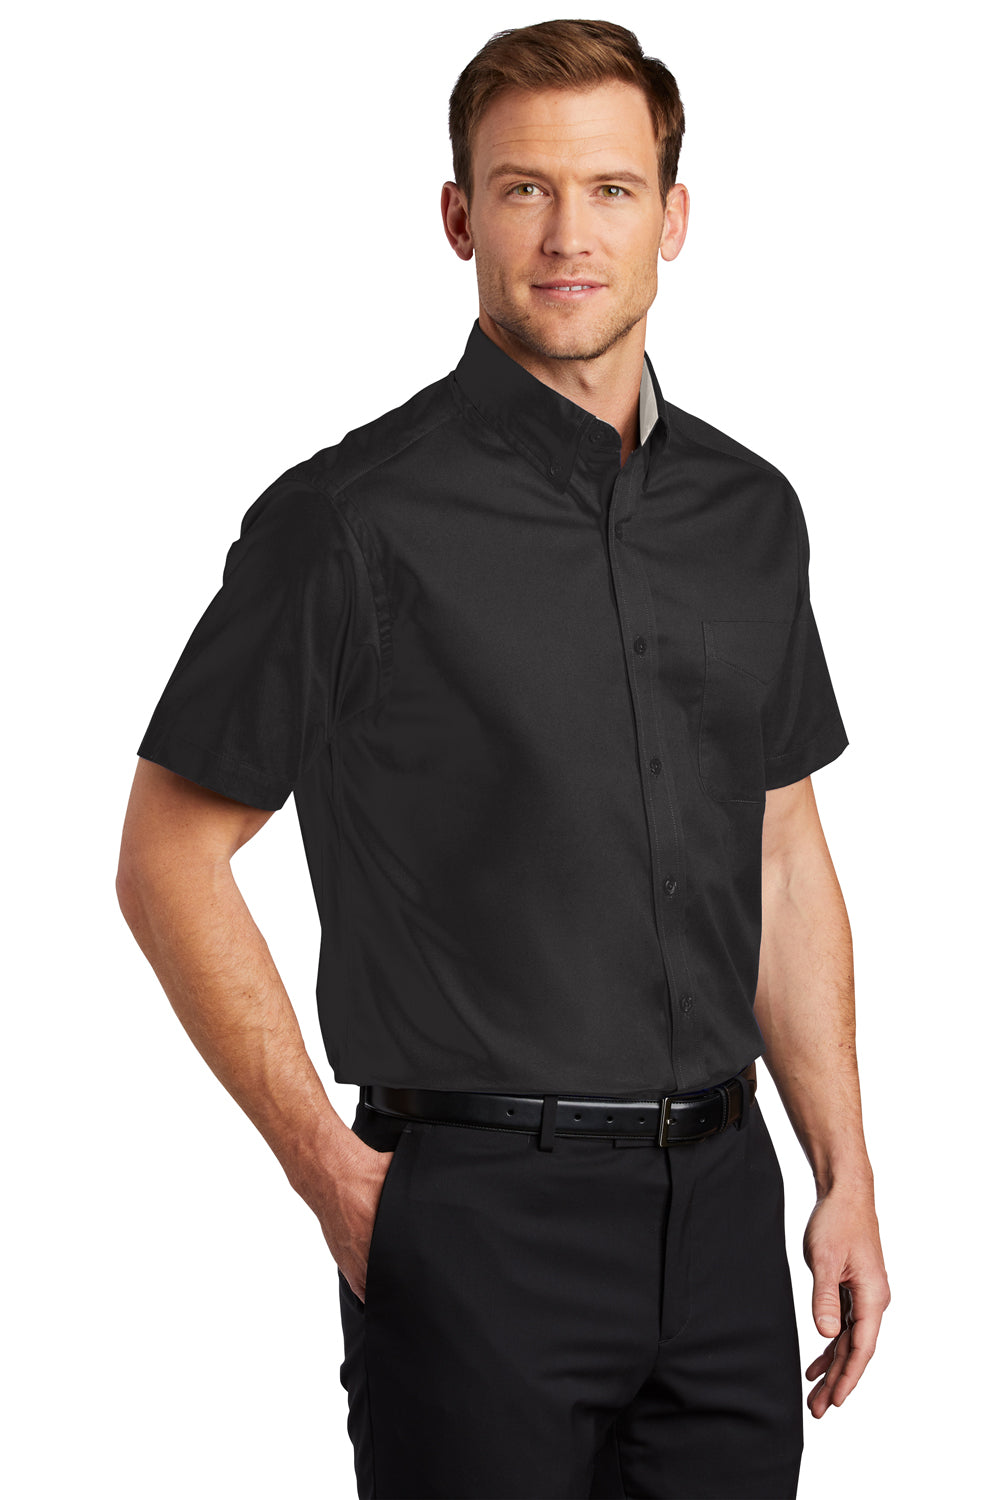 Port Authority S508/TLS508 Mens Easy Care Wrinkle Resistant Short Sleeve Button Down Shirt w/ Pocket Black 3Q